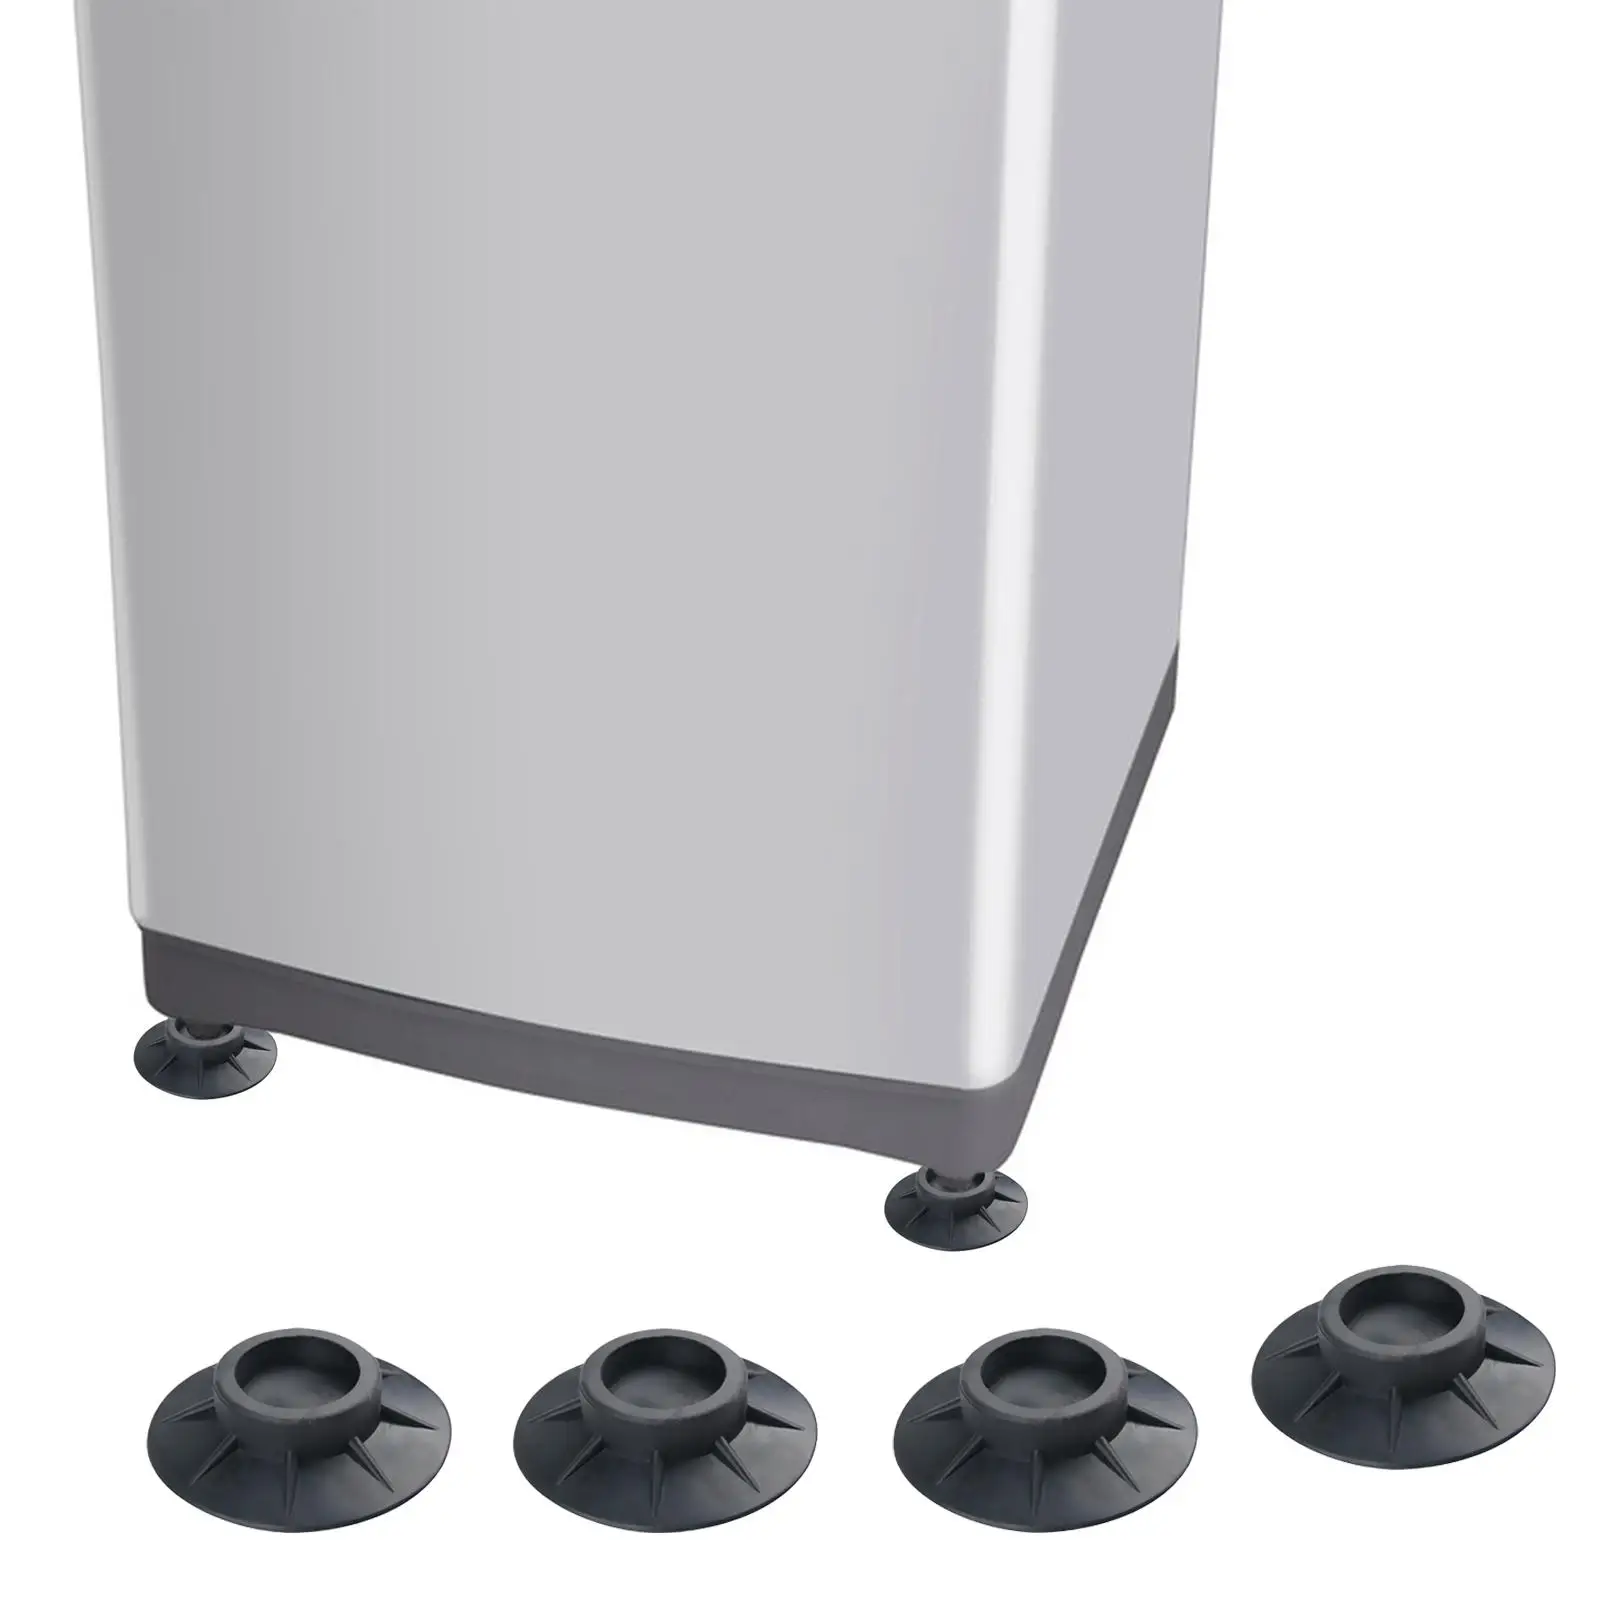 4Pcs Dryer Pedestals Noise Dampening Protector Silent Washers for Dishwashers